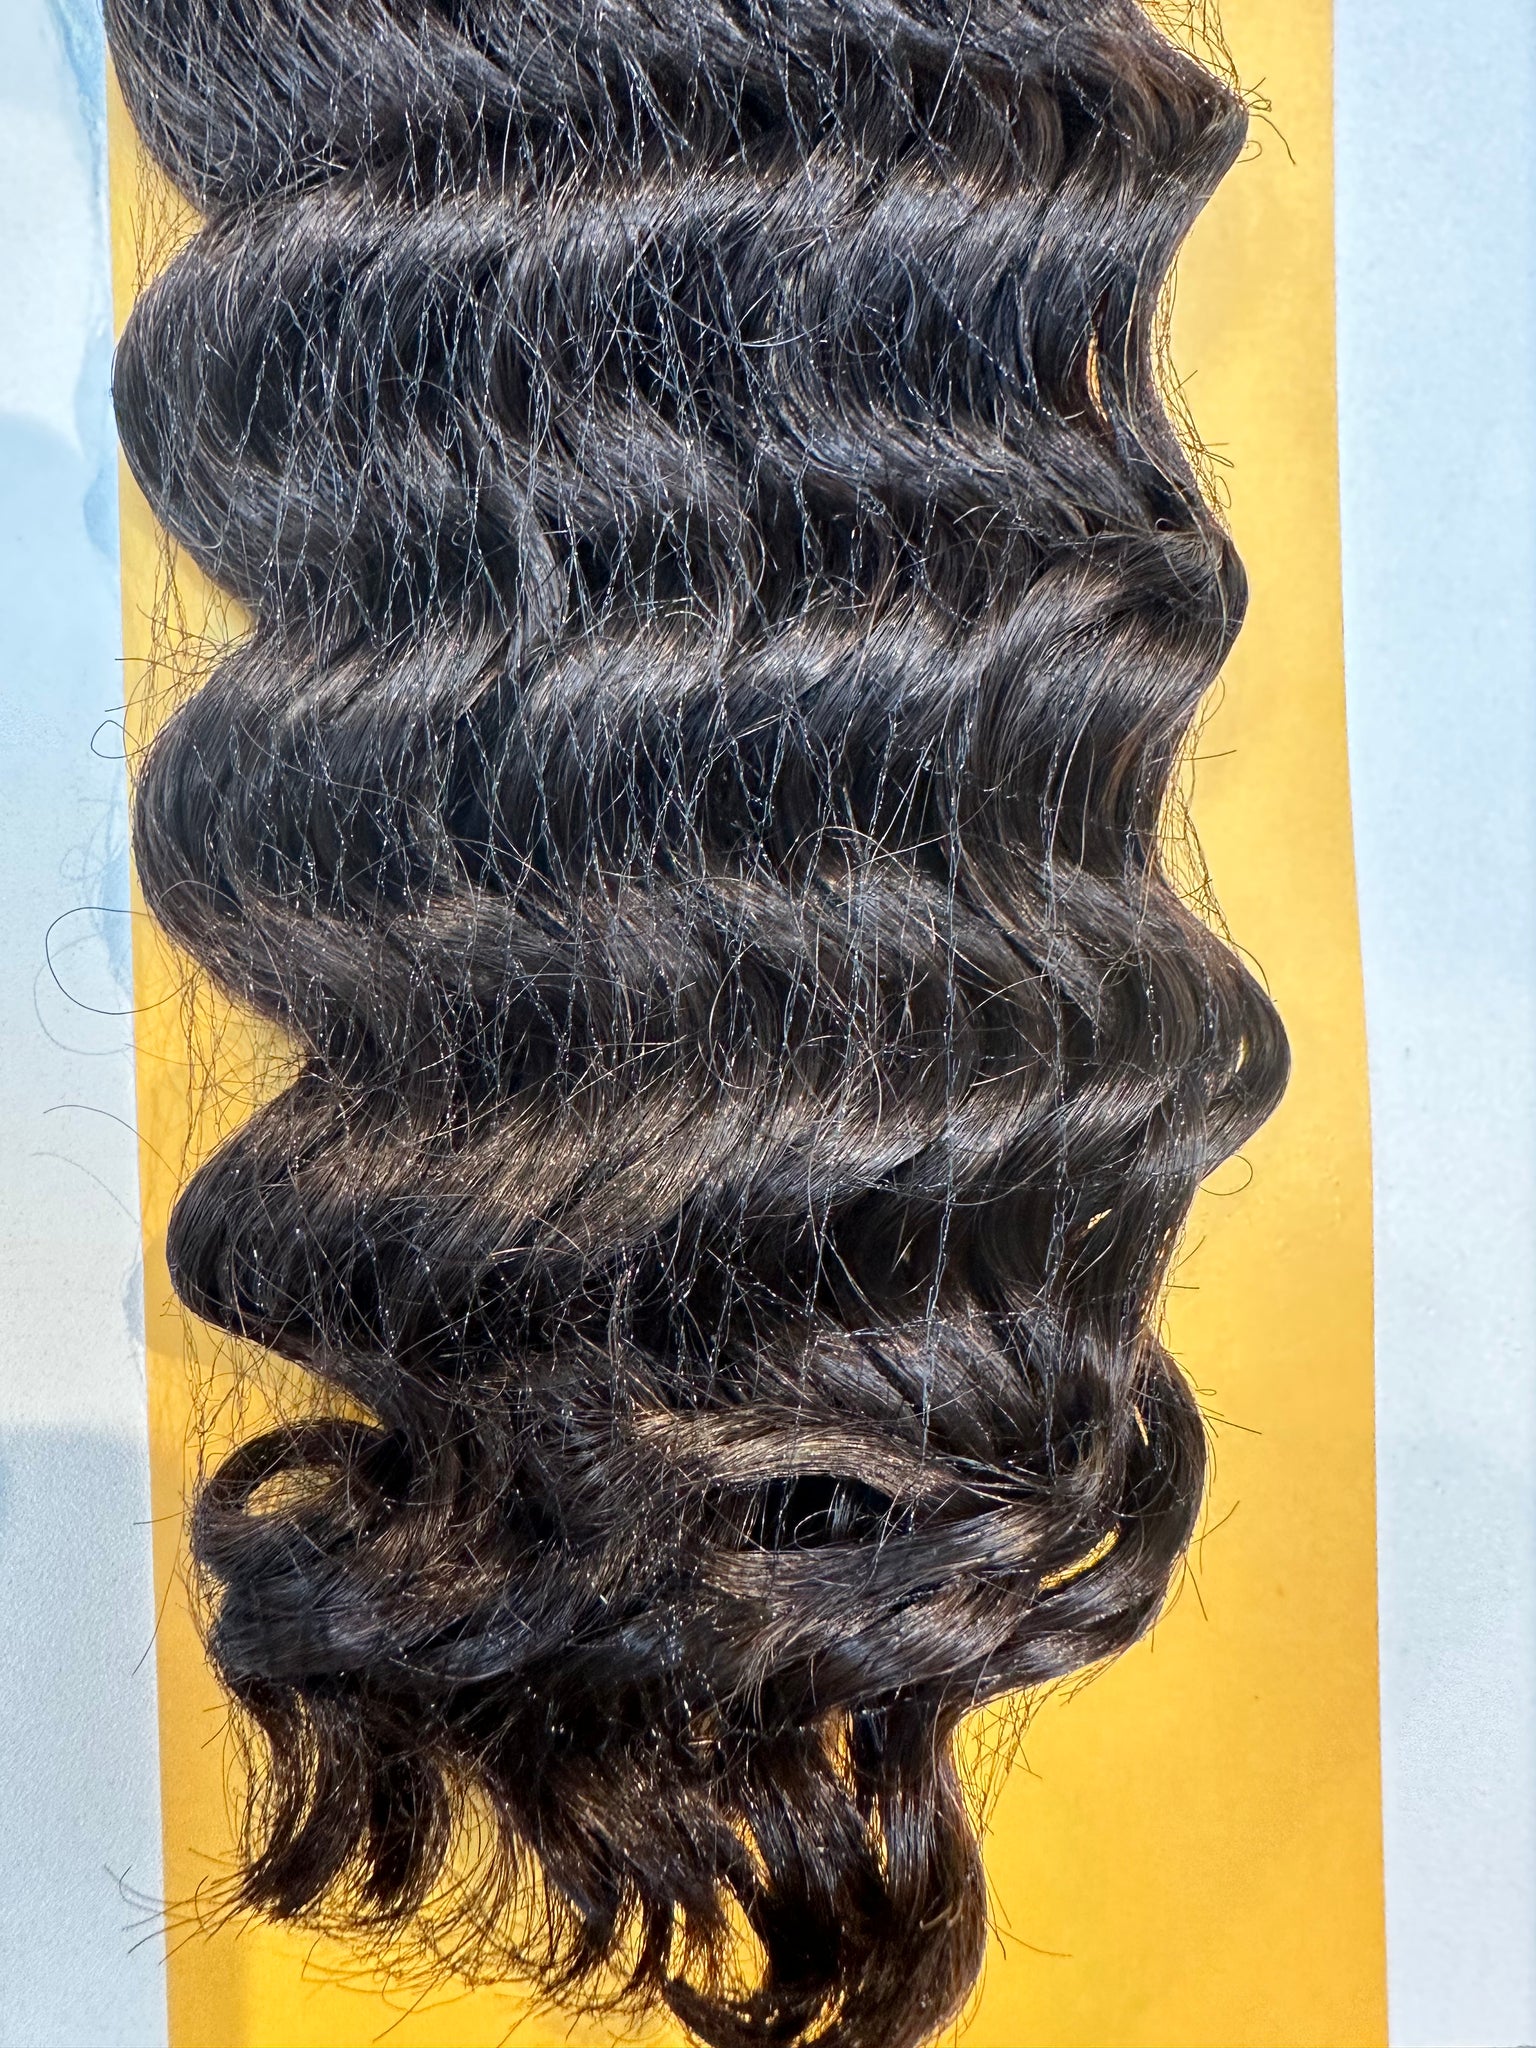 EVE CLEOPATRA FRENCH DEEP WAVE BULK HUMAN HAIR 18 (HUMAN BRAIDING HAI –  Curly Gurl Luv Beauty Supply